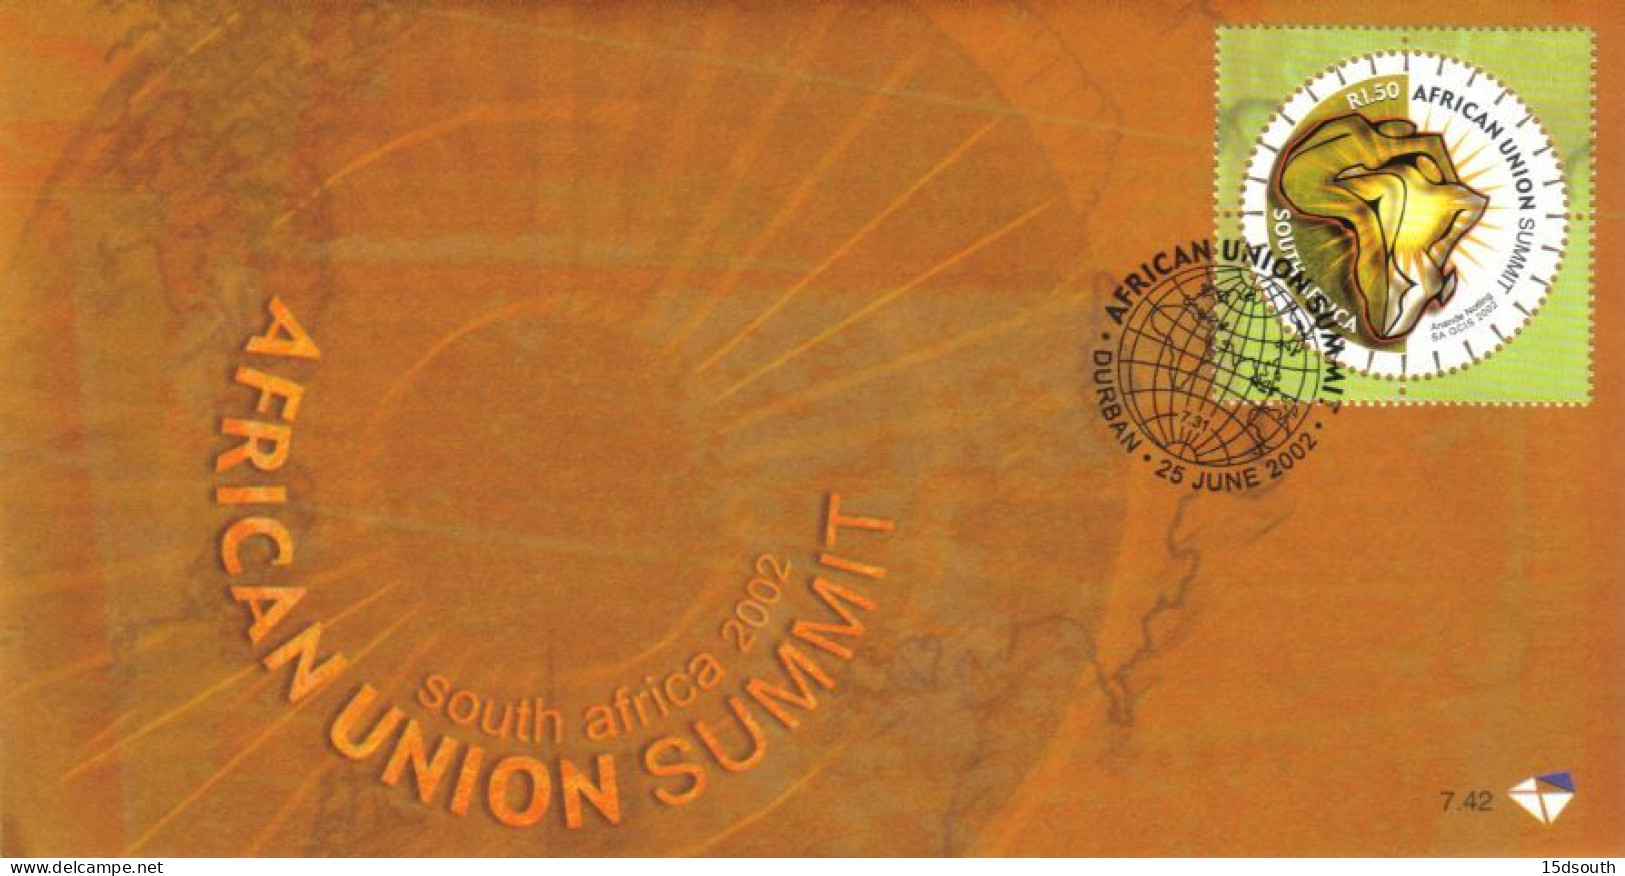 South Africa - 2002 African Union Summit FDC # SG 1385 , Mi 1446 - FDC